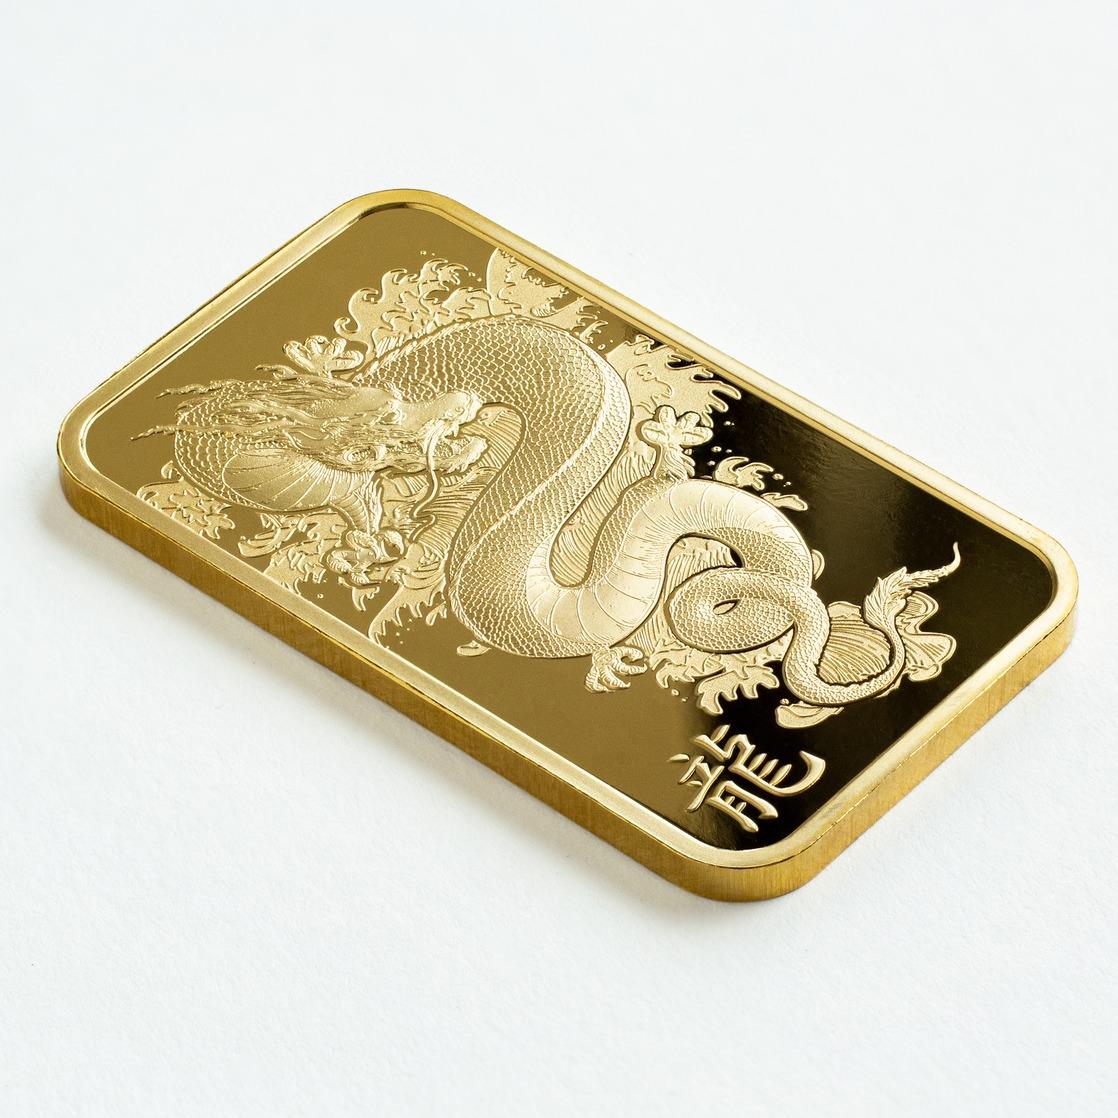 MASDORA X Pamp Suisse Lunar Dragon Gold Minted Bar Emas 999.9 (1Oz)